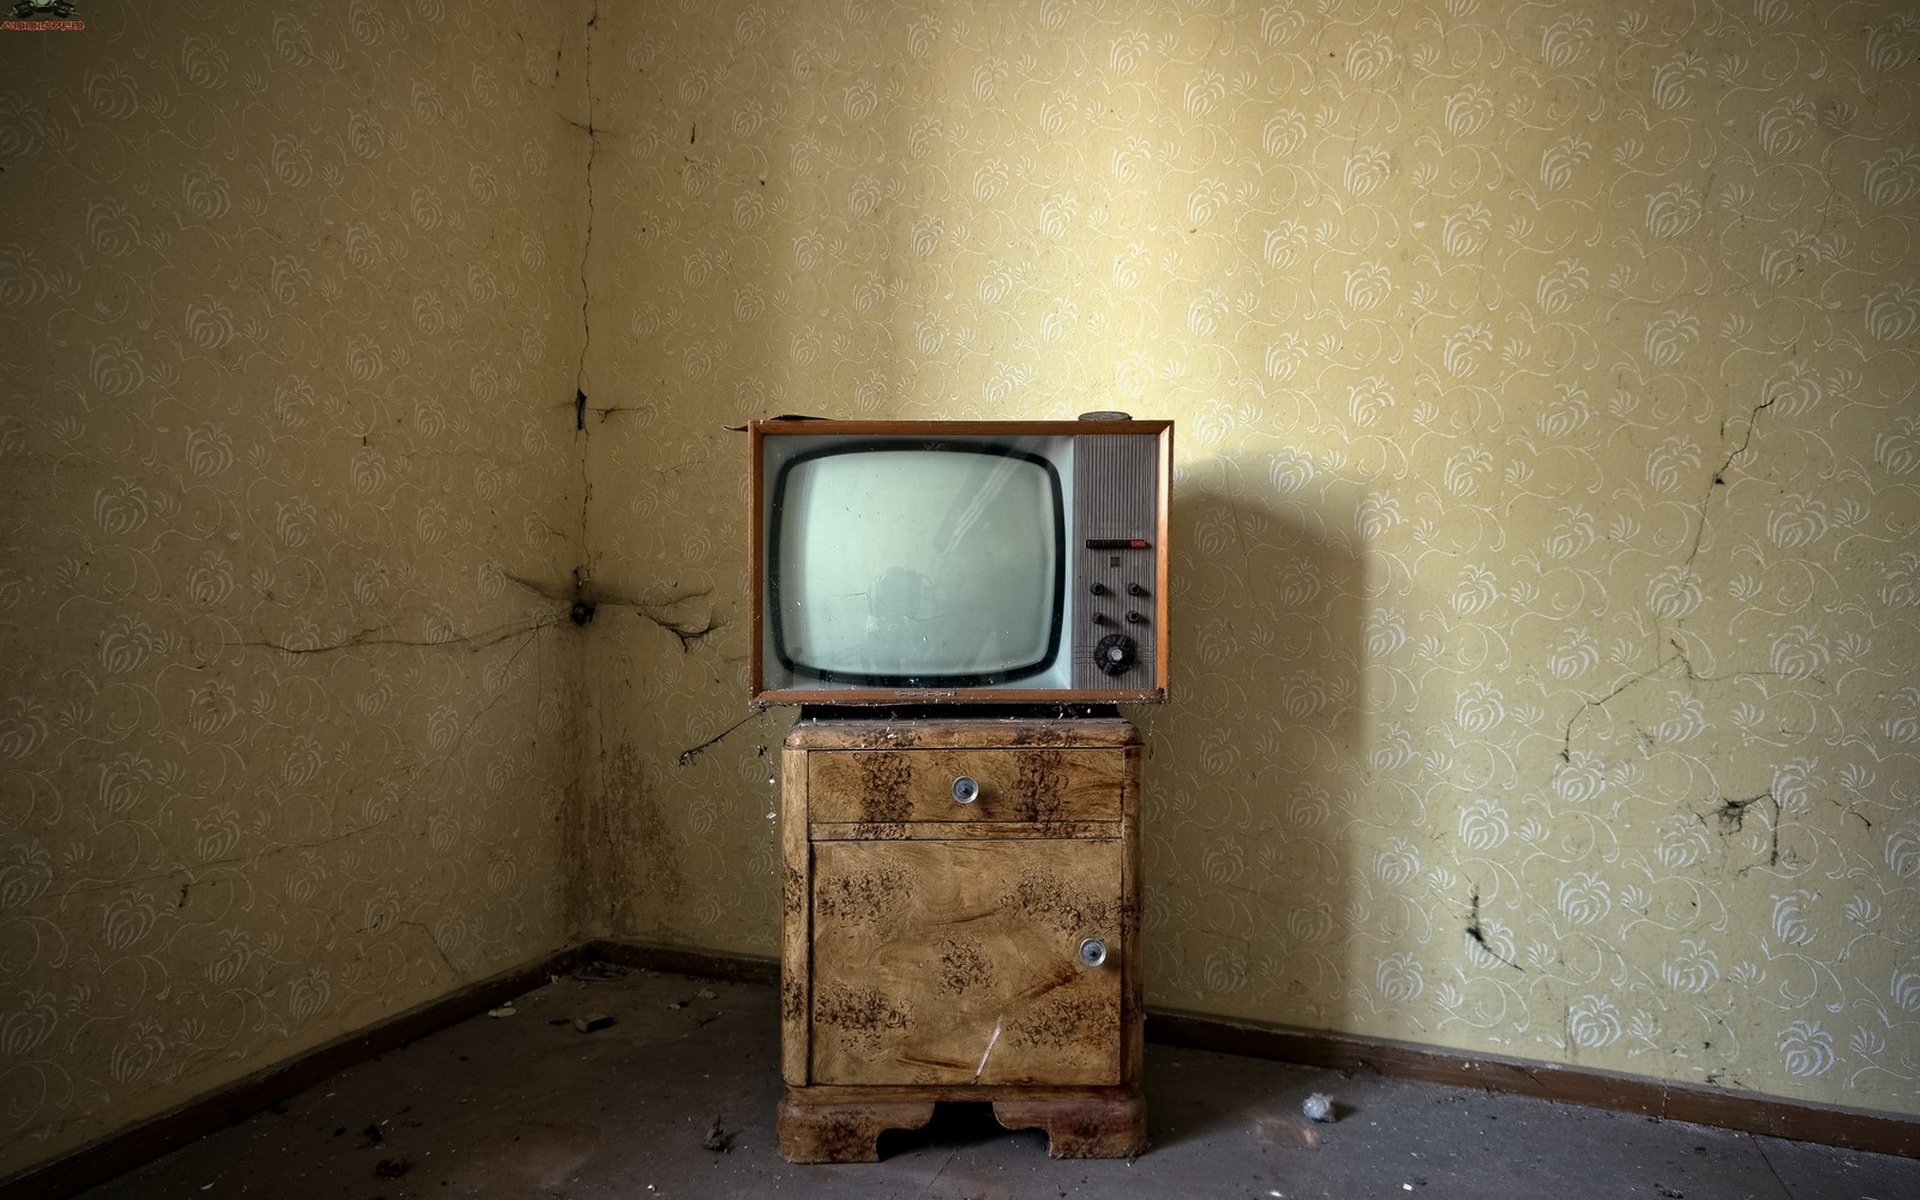 Телевизор кв 1. Телевизор Рубин 207. Старый телевизор. Старый телевизор в комнате. Старинный телевизор.